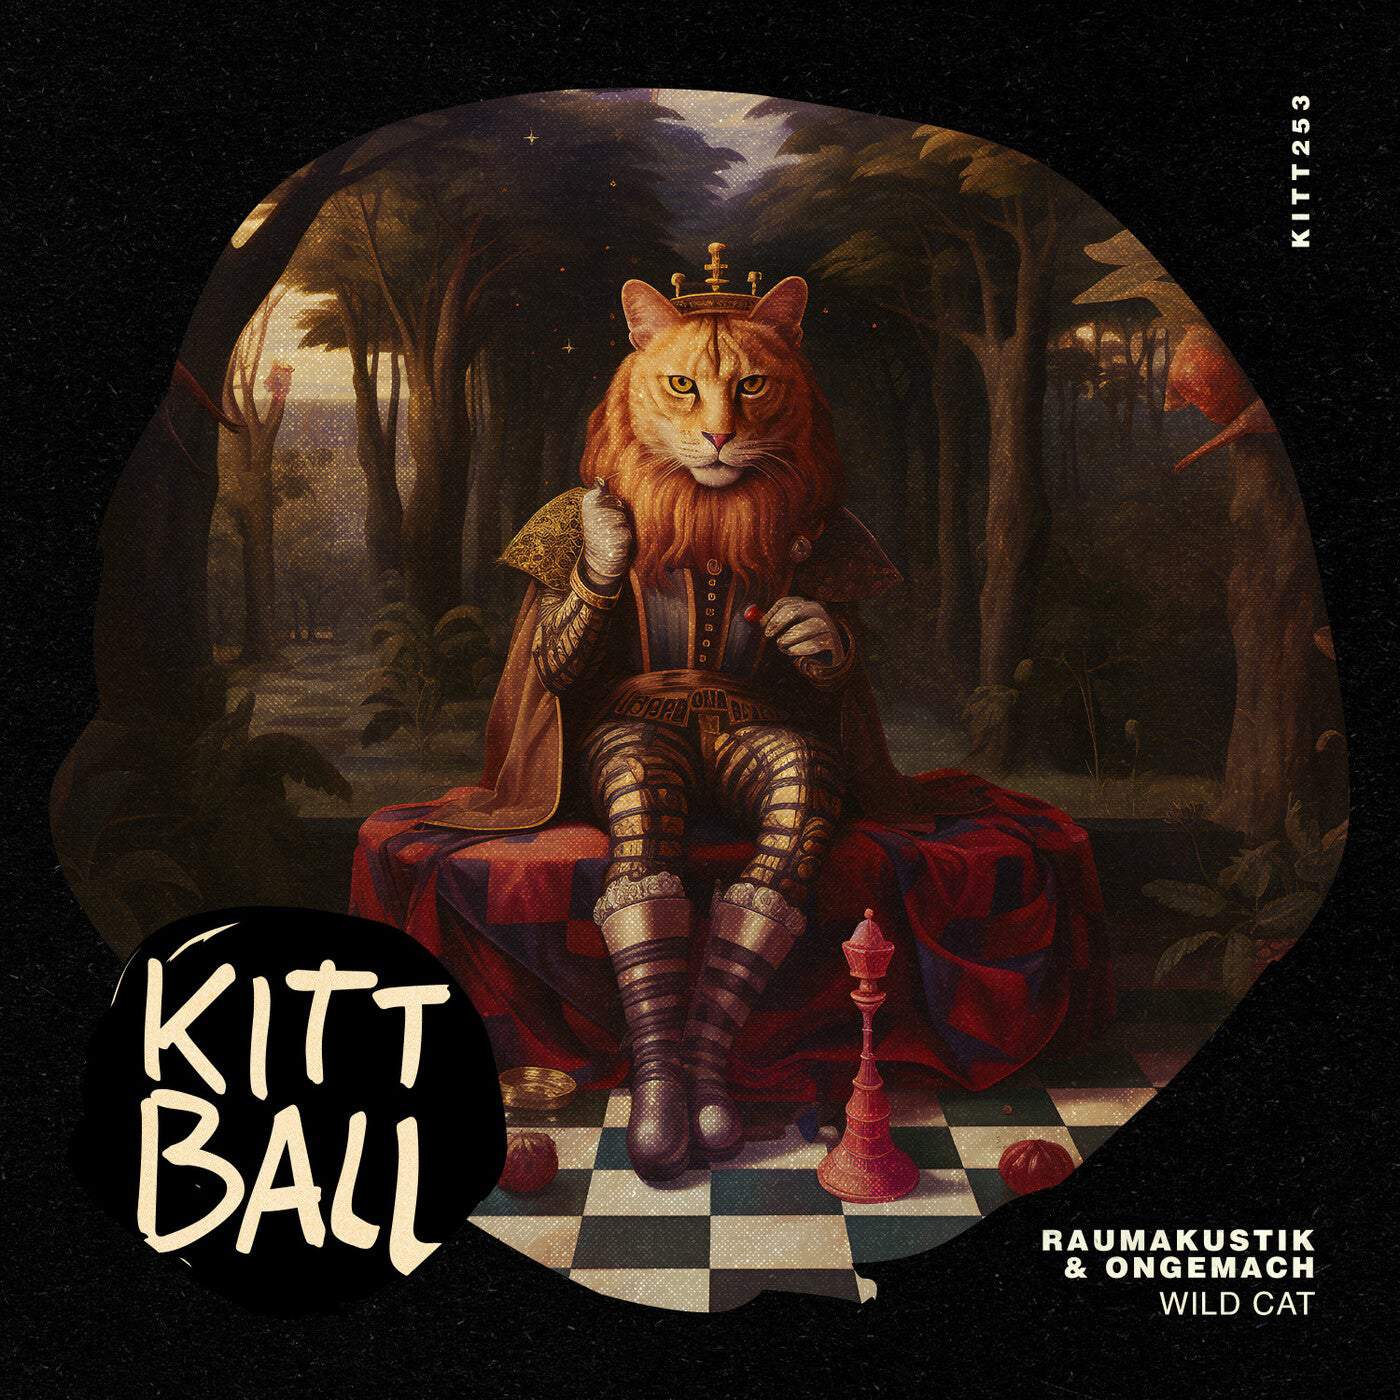 image cover: Wild Cat by Raumakustik, ONGEMACH on Kittball